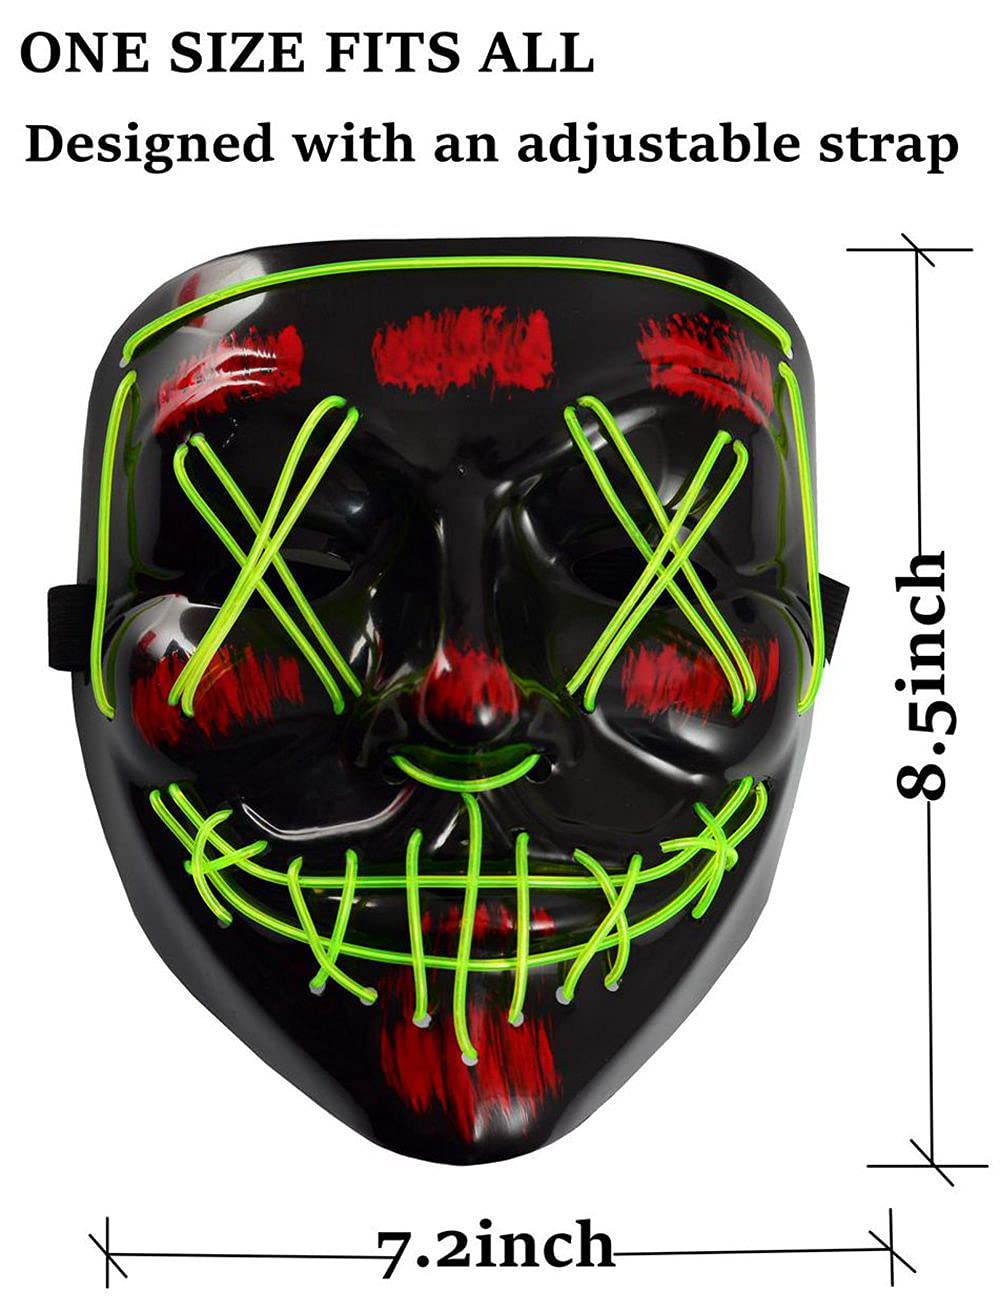 Purge mask - LED Halloween Face Mask LED Light up Mask Cosplay,Halloween Masks for Men Women Kids